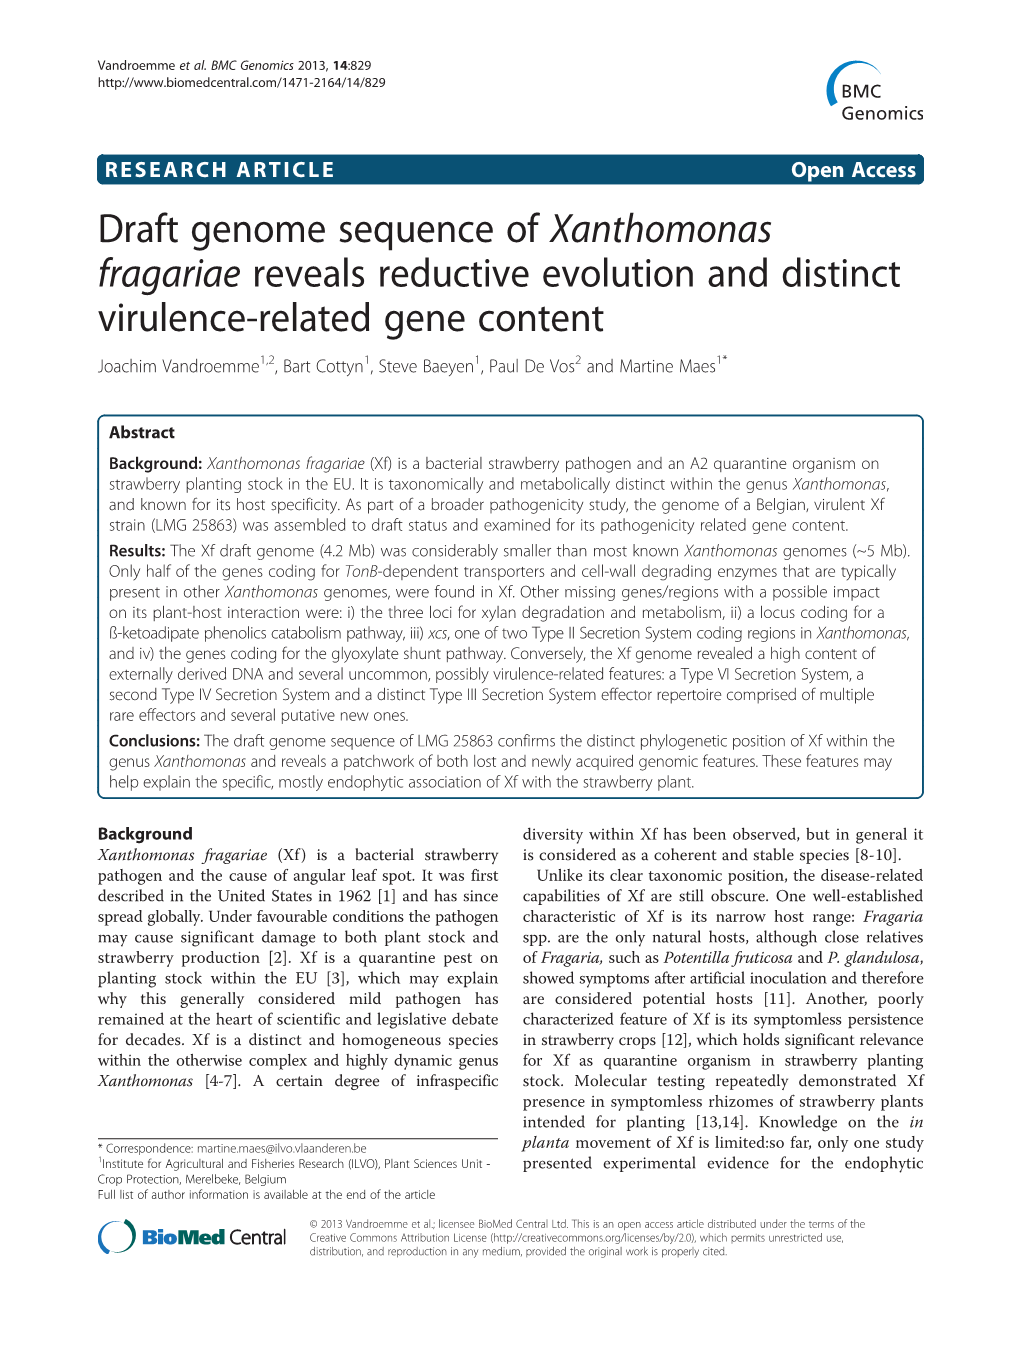 Draft Genome Sequence of Xanthomonas Fragariae